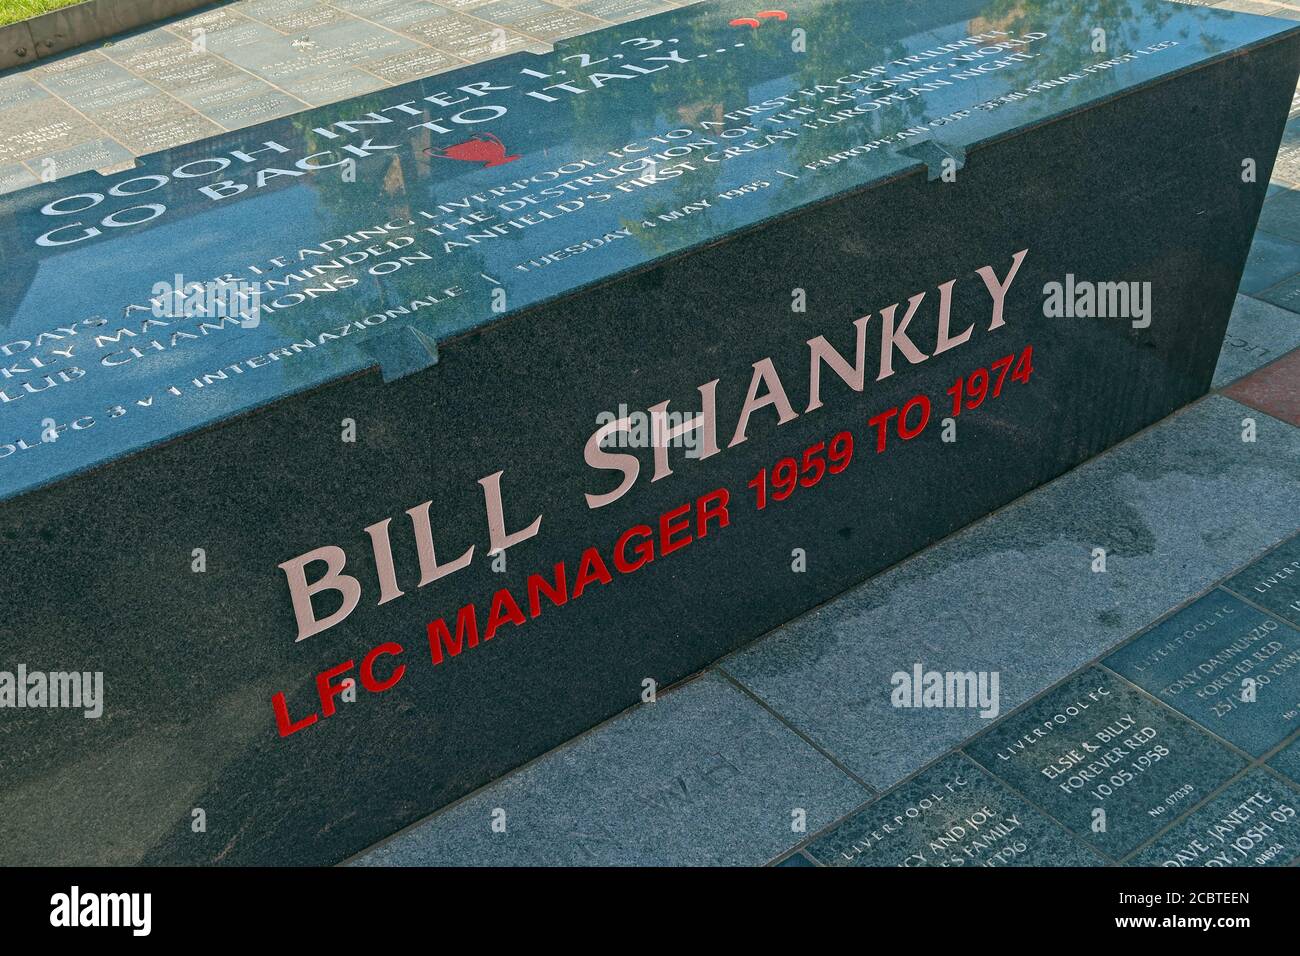 Bill Shankly stone 1959-1974, LFC,Liverpool Football Club, Anfield, Premier League, Merseyside,North West England, UK, L4 2UZ Stock Photo